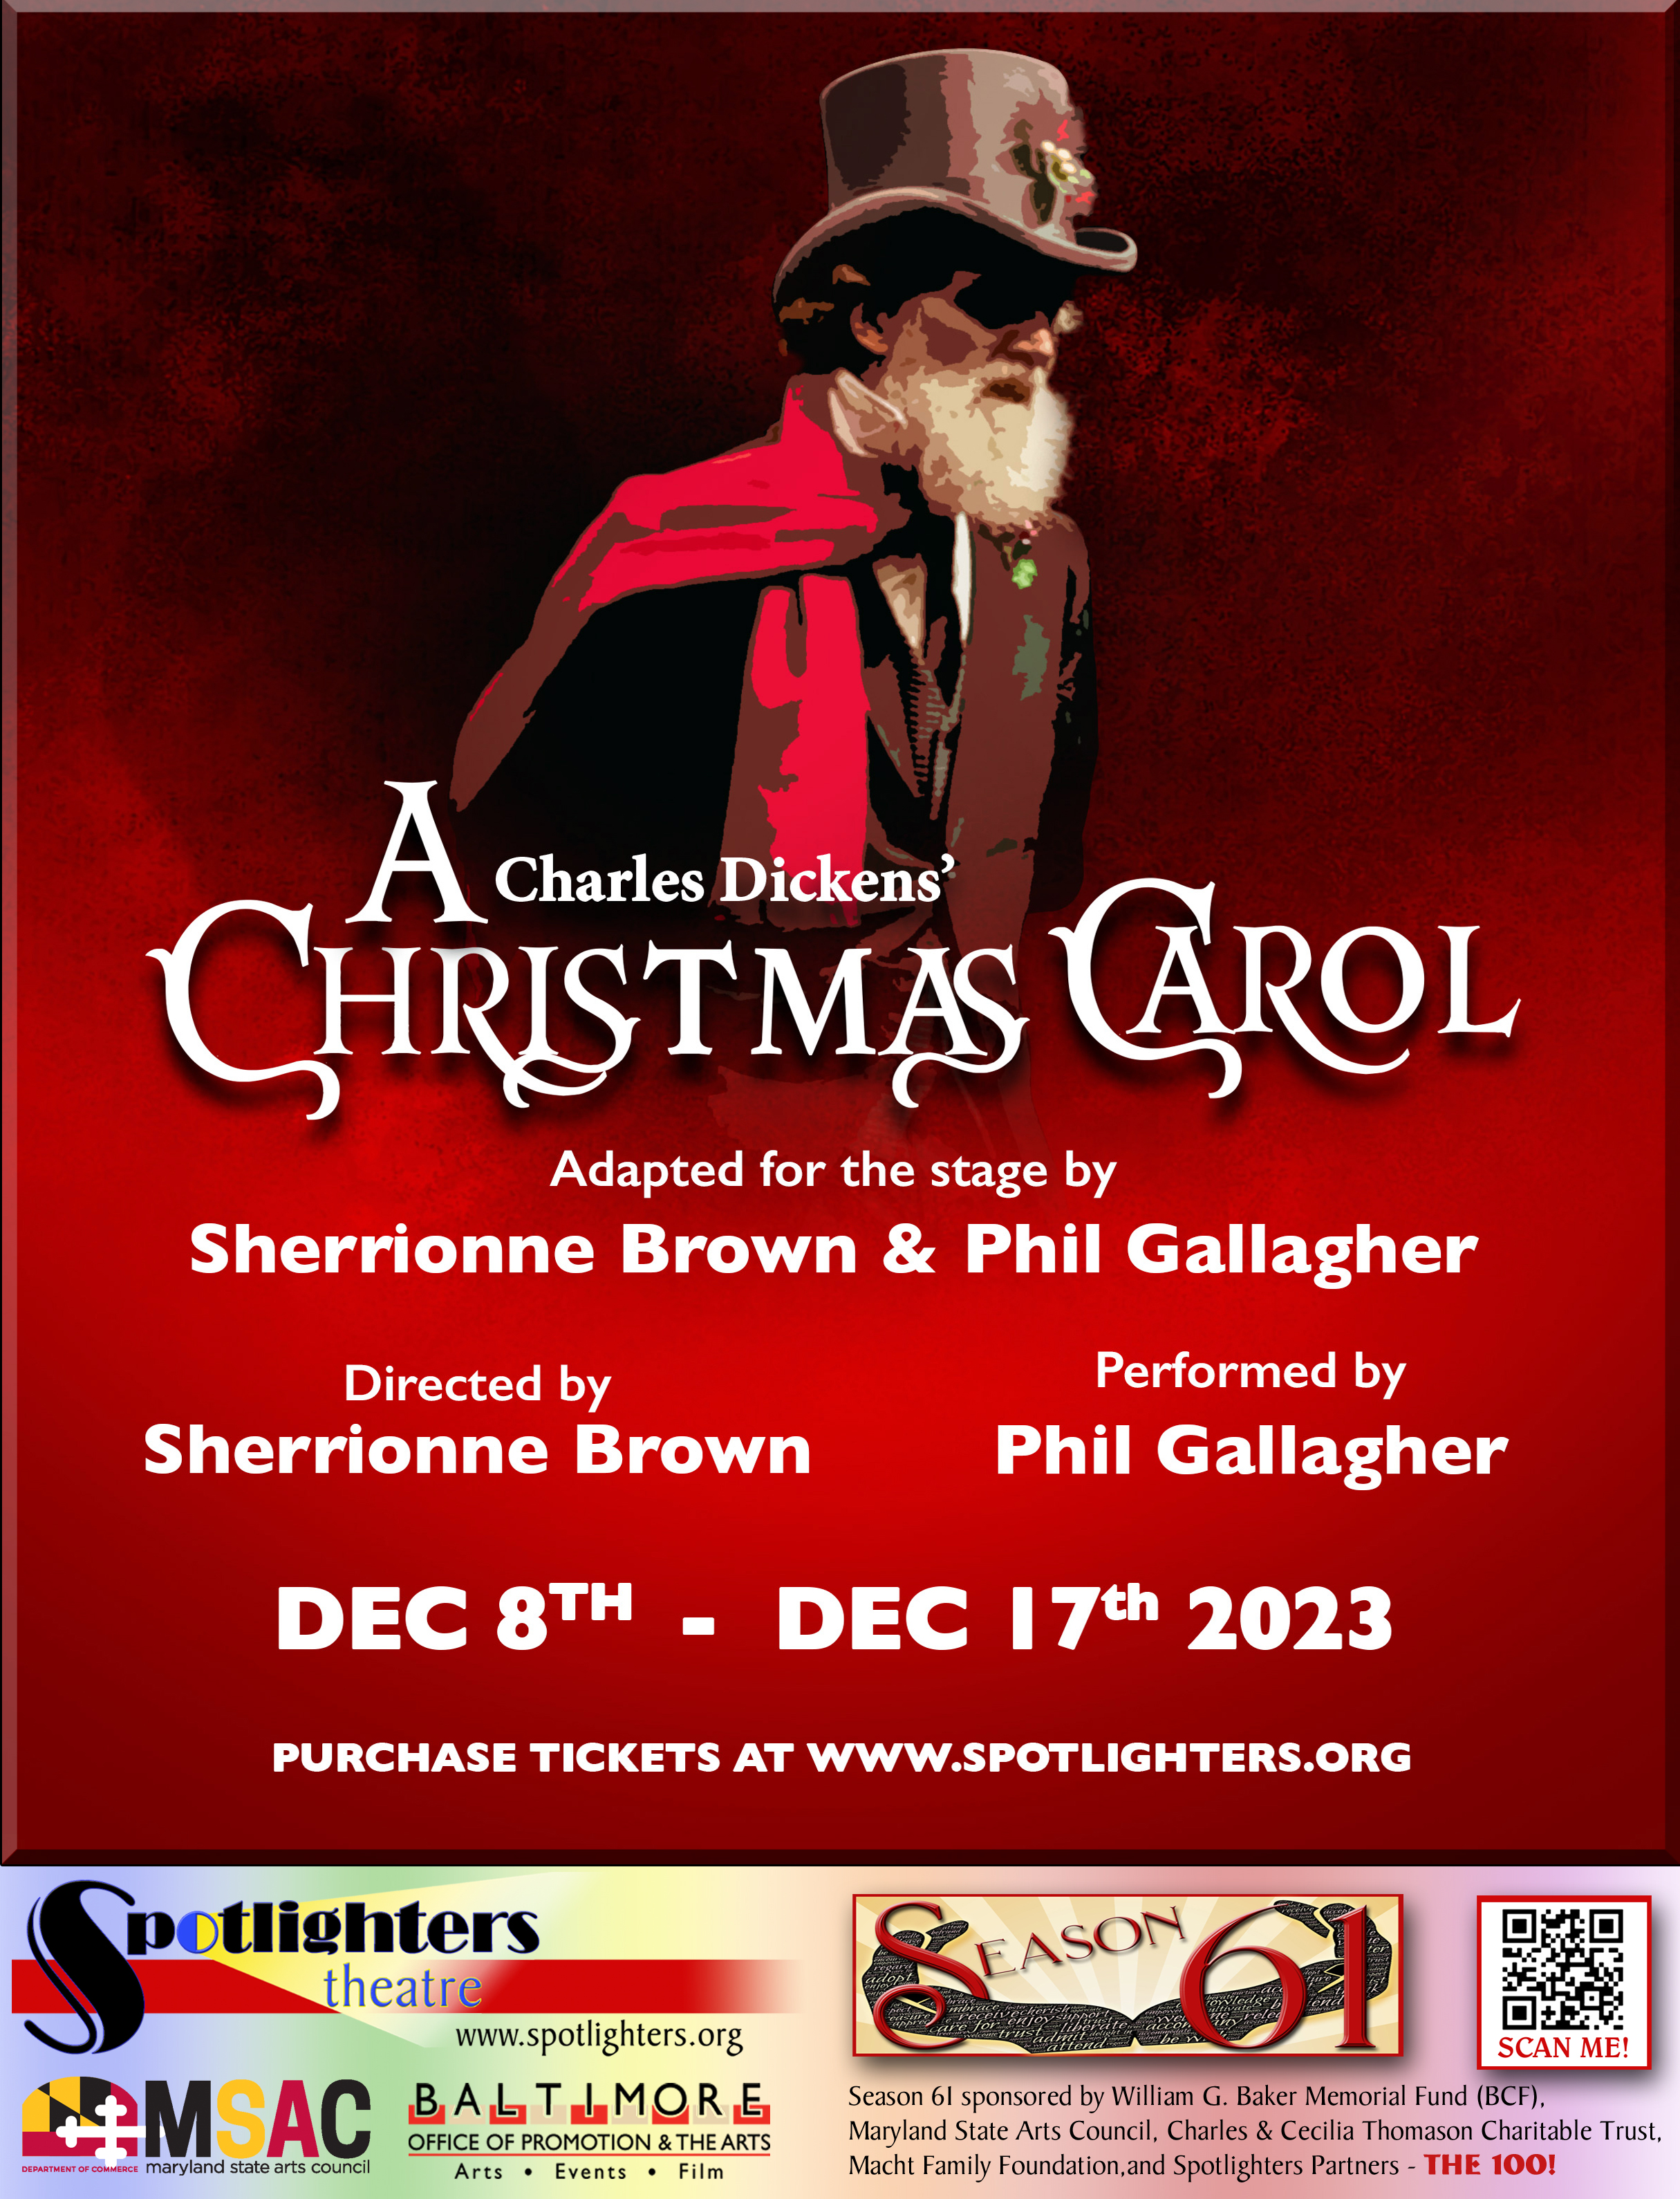 A Dickens'''' Christmas Carol Dec 8 - 17, 2023 SEVEN Performances www.spotlighters.org/christmascarol